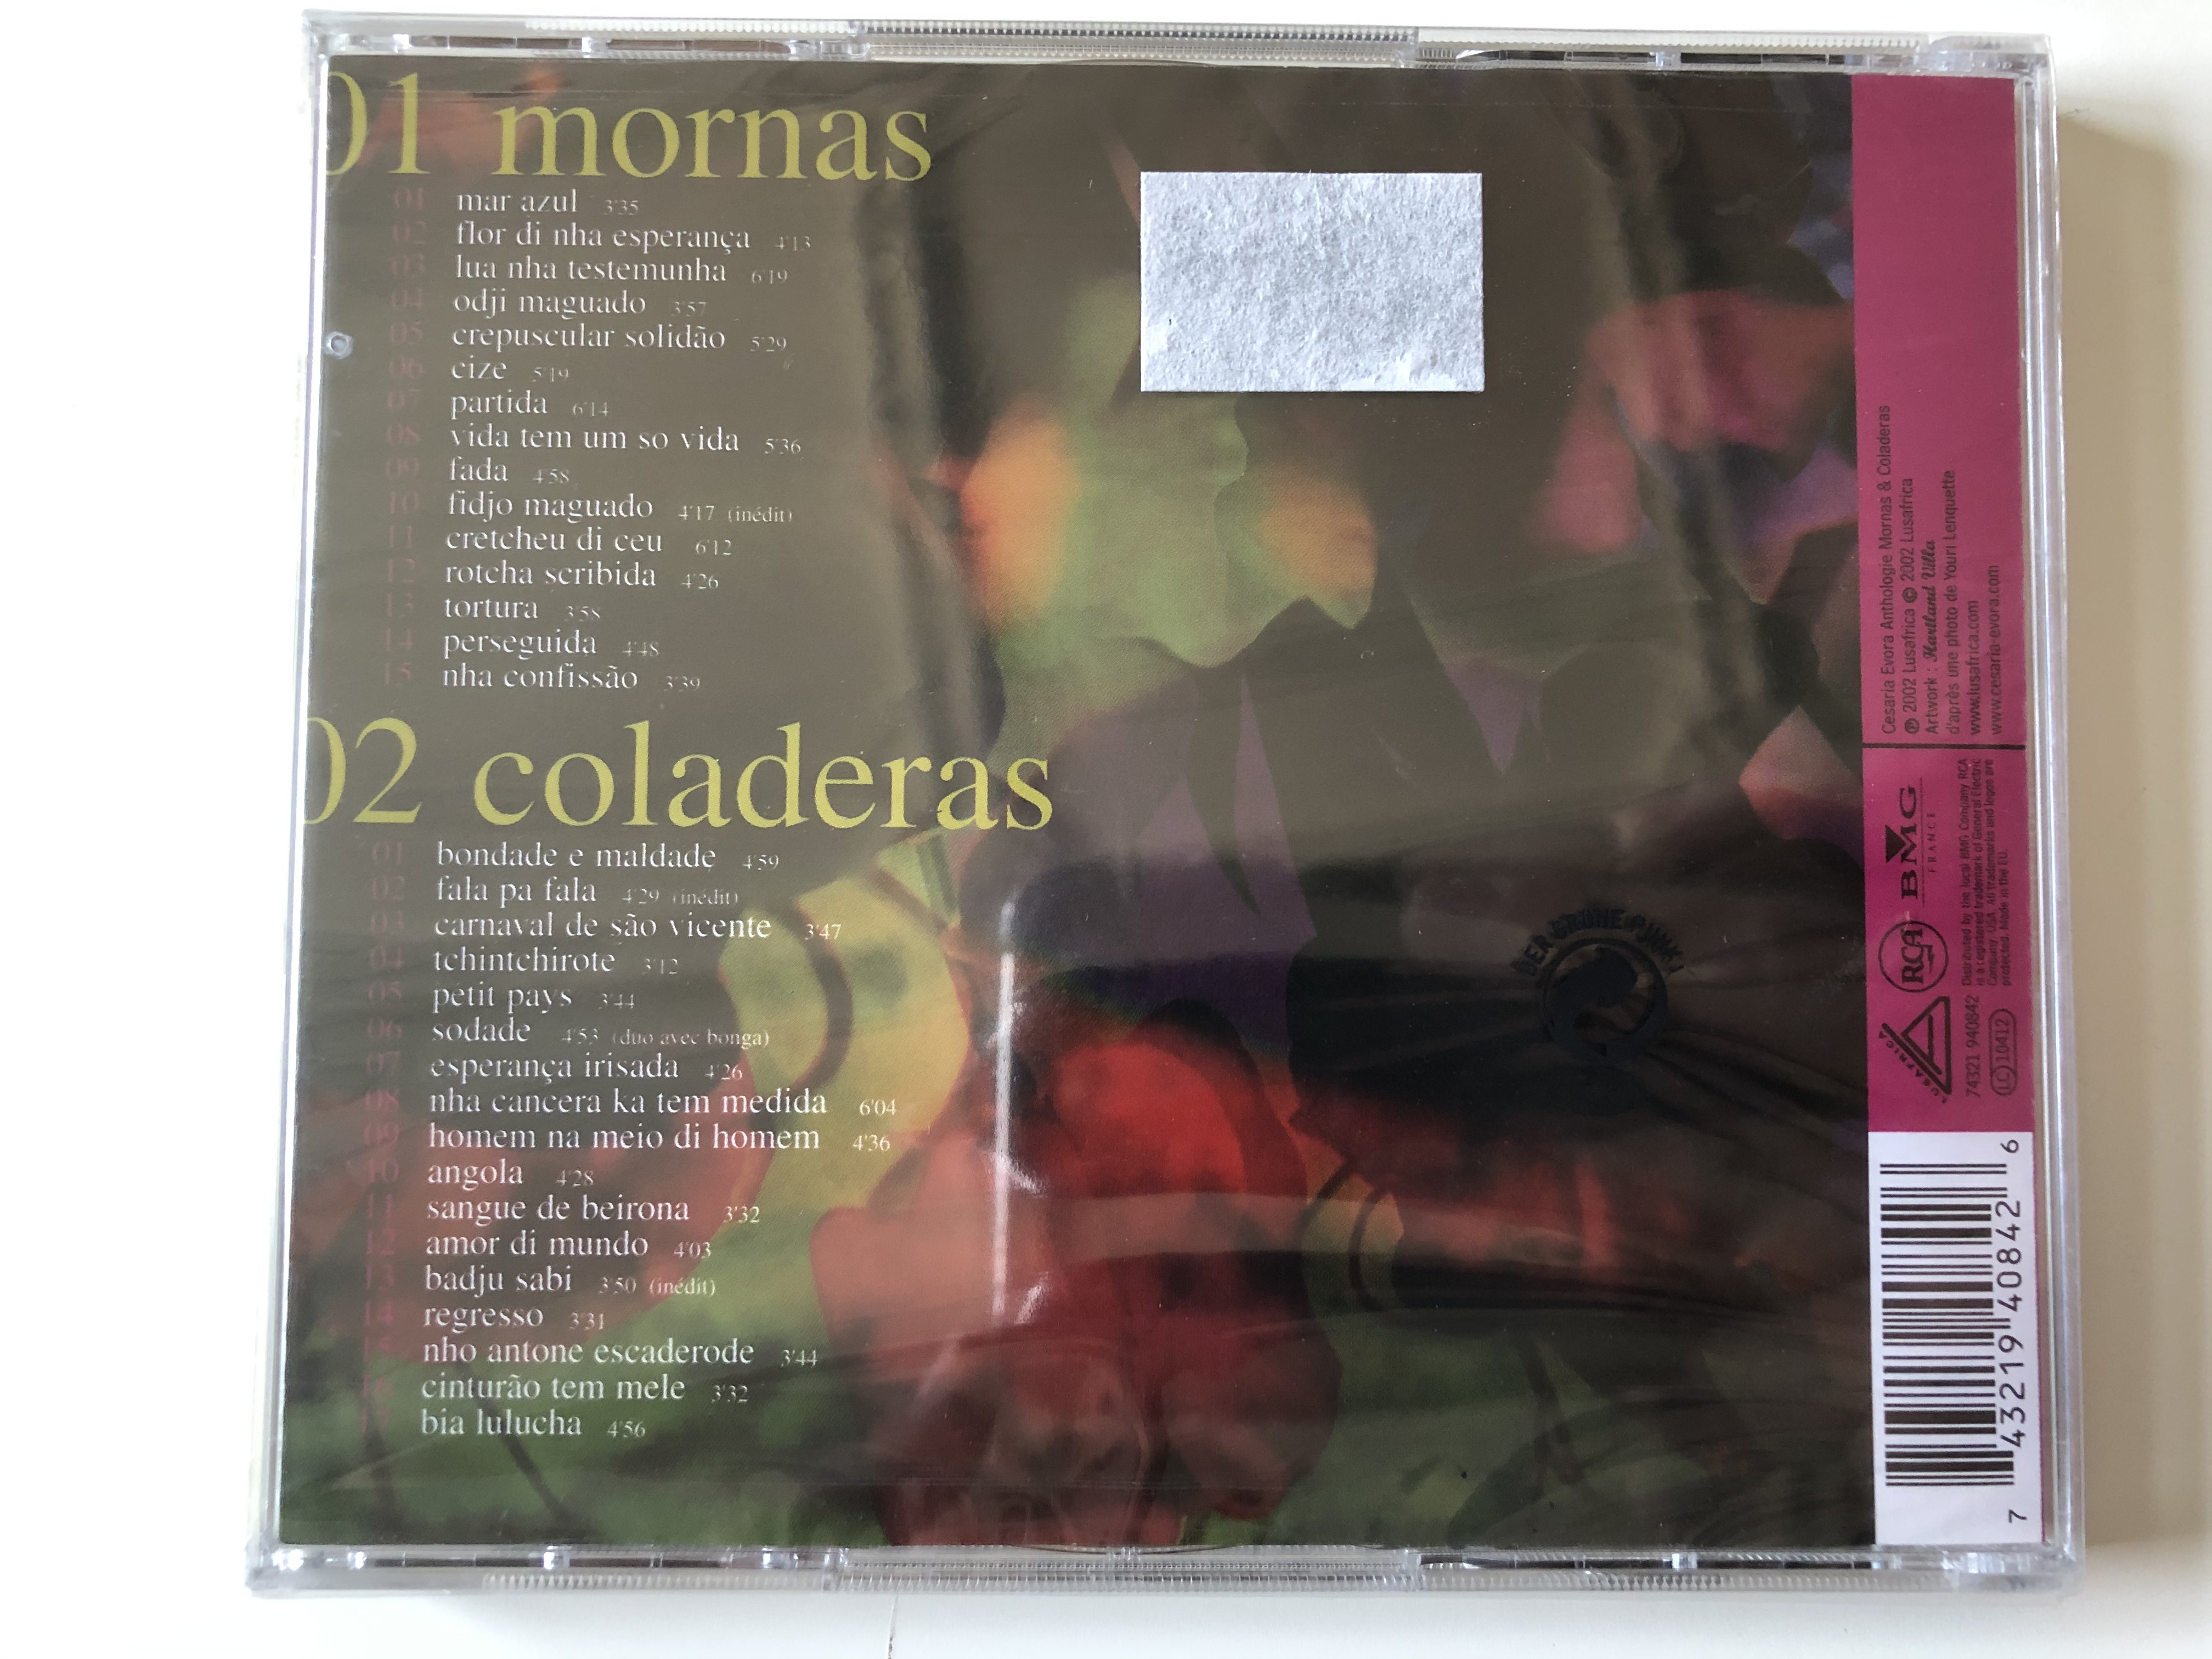 cesaria-evora-anthologie-mornas-coladeras-lusafrica-2x-audio-cd-2002-74321-940842-2-.jpg